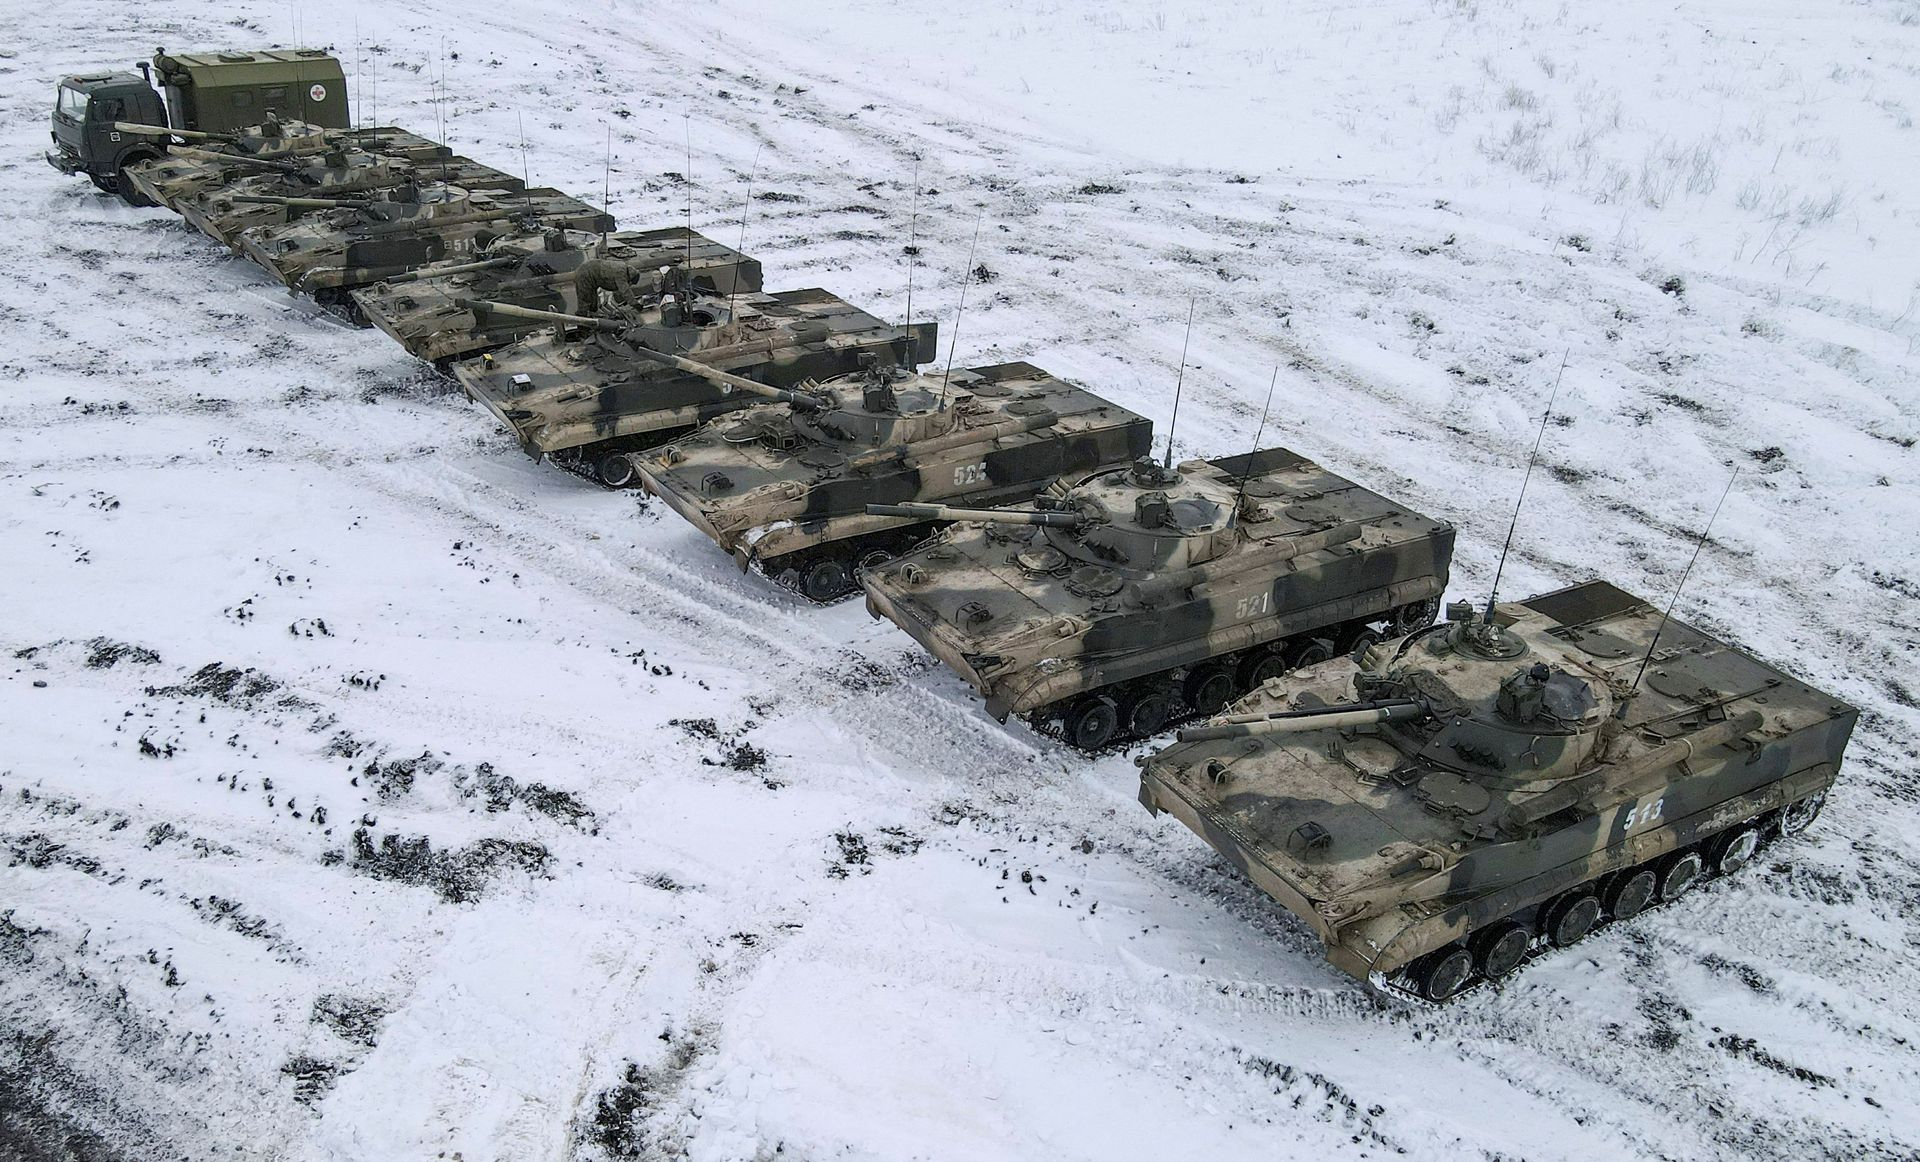 An aerial view shows Russian BMP-3